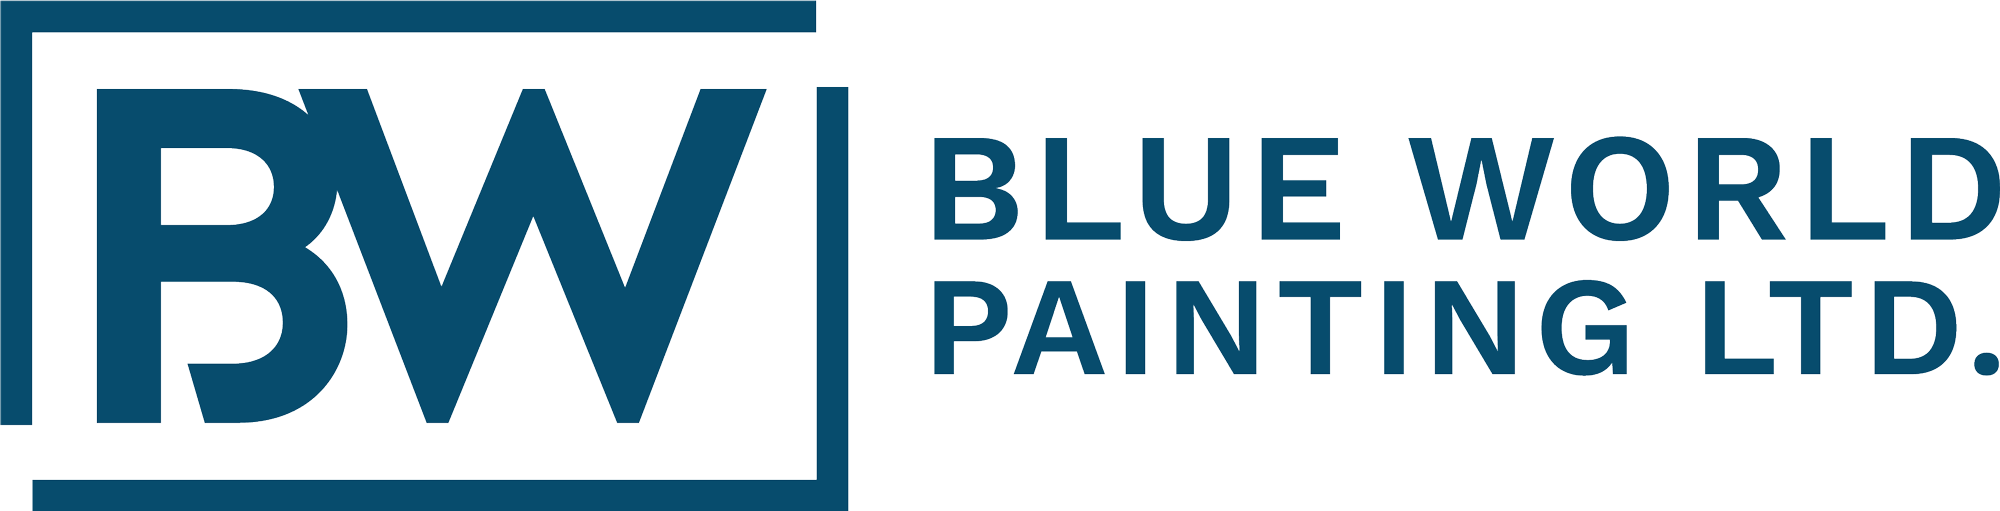 Blue World Painting Ltd.